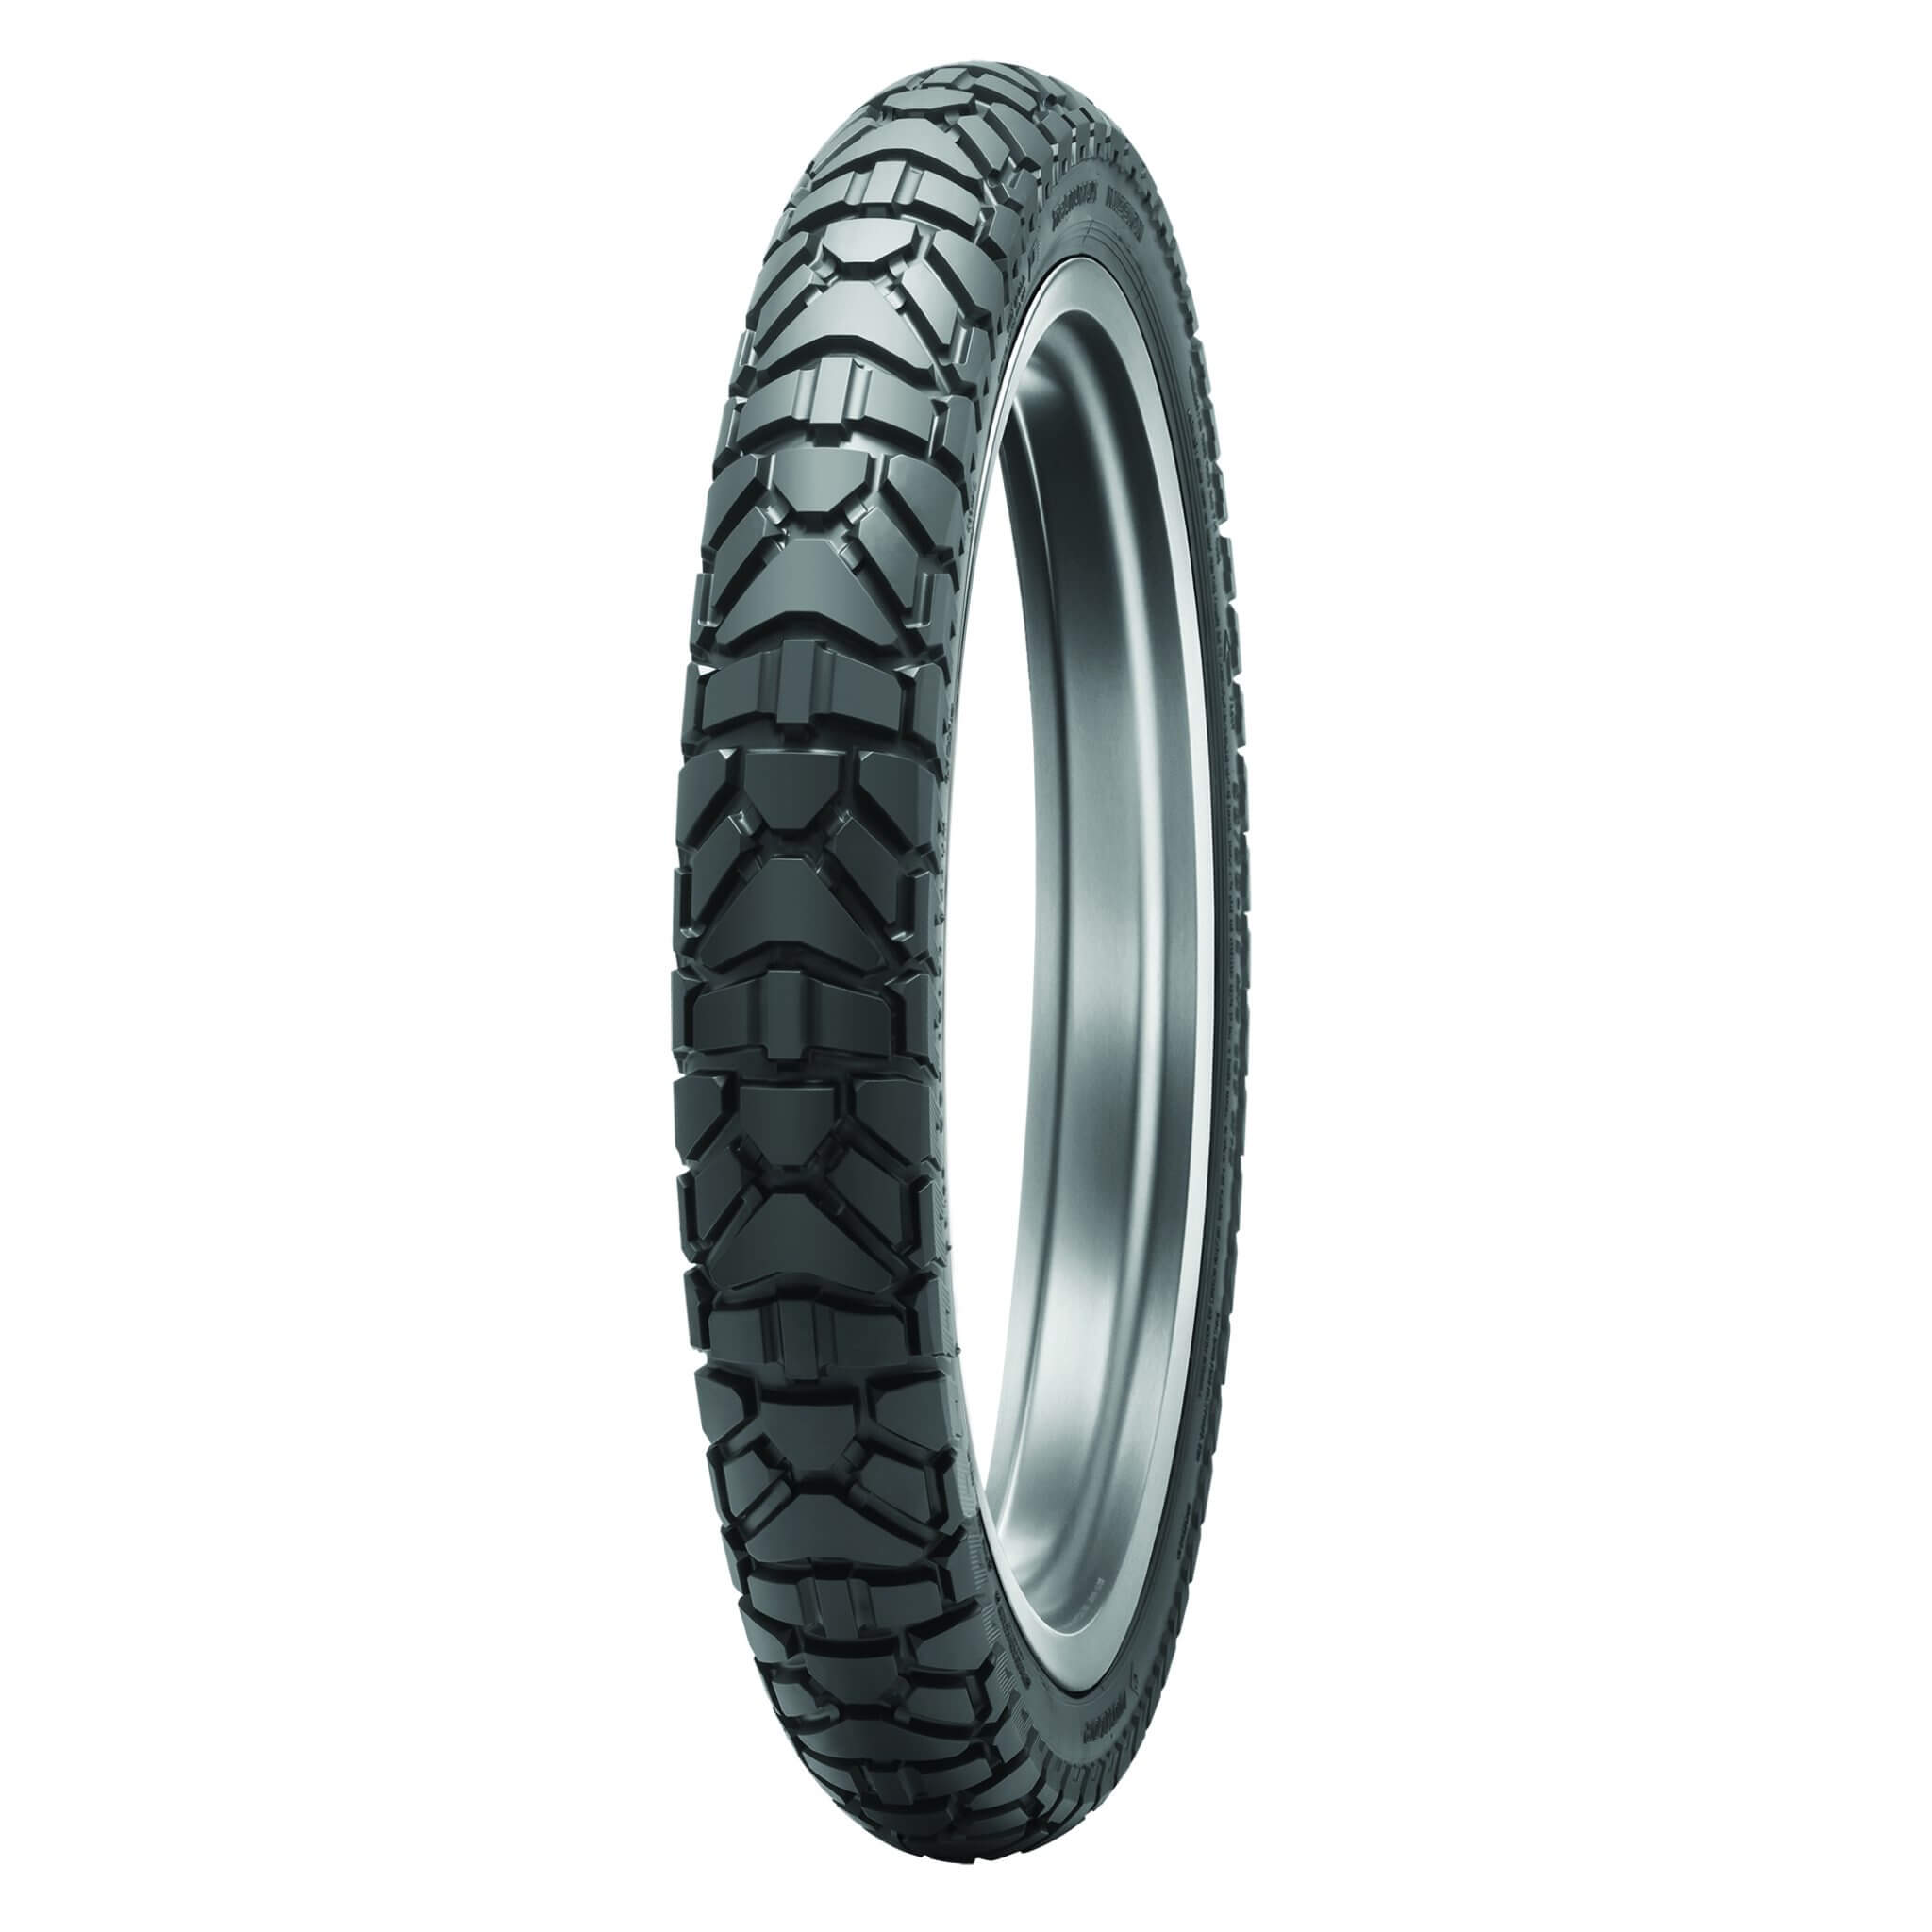 New Dunlop 90/90-21 & 120/90-18 Trailmax Mission Tires & Tubes XR250L & DRZ400S